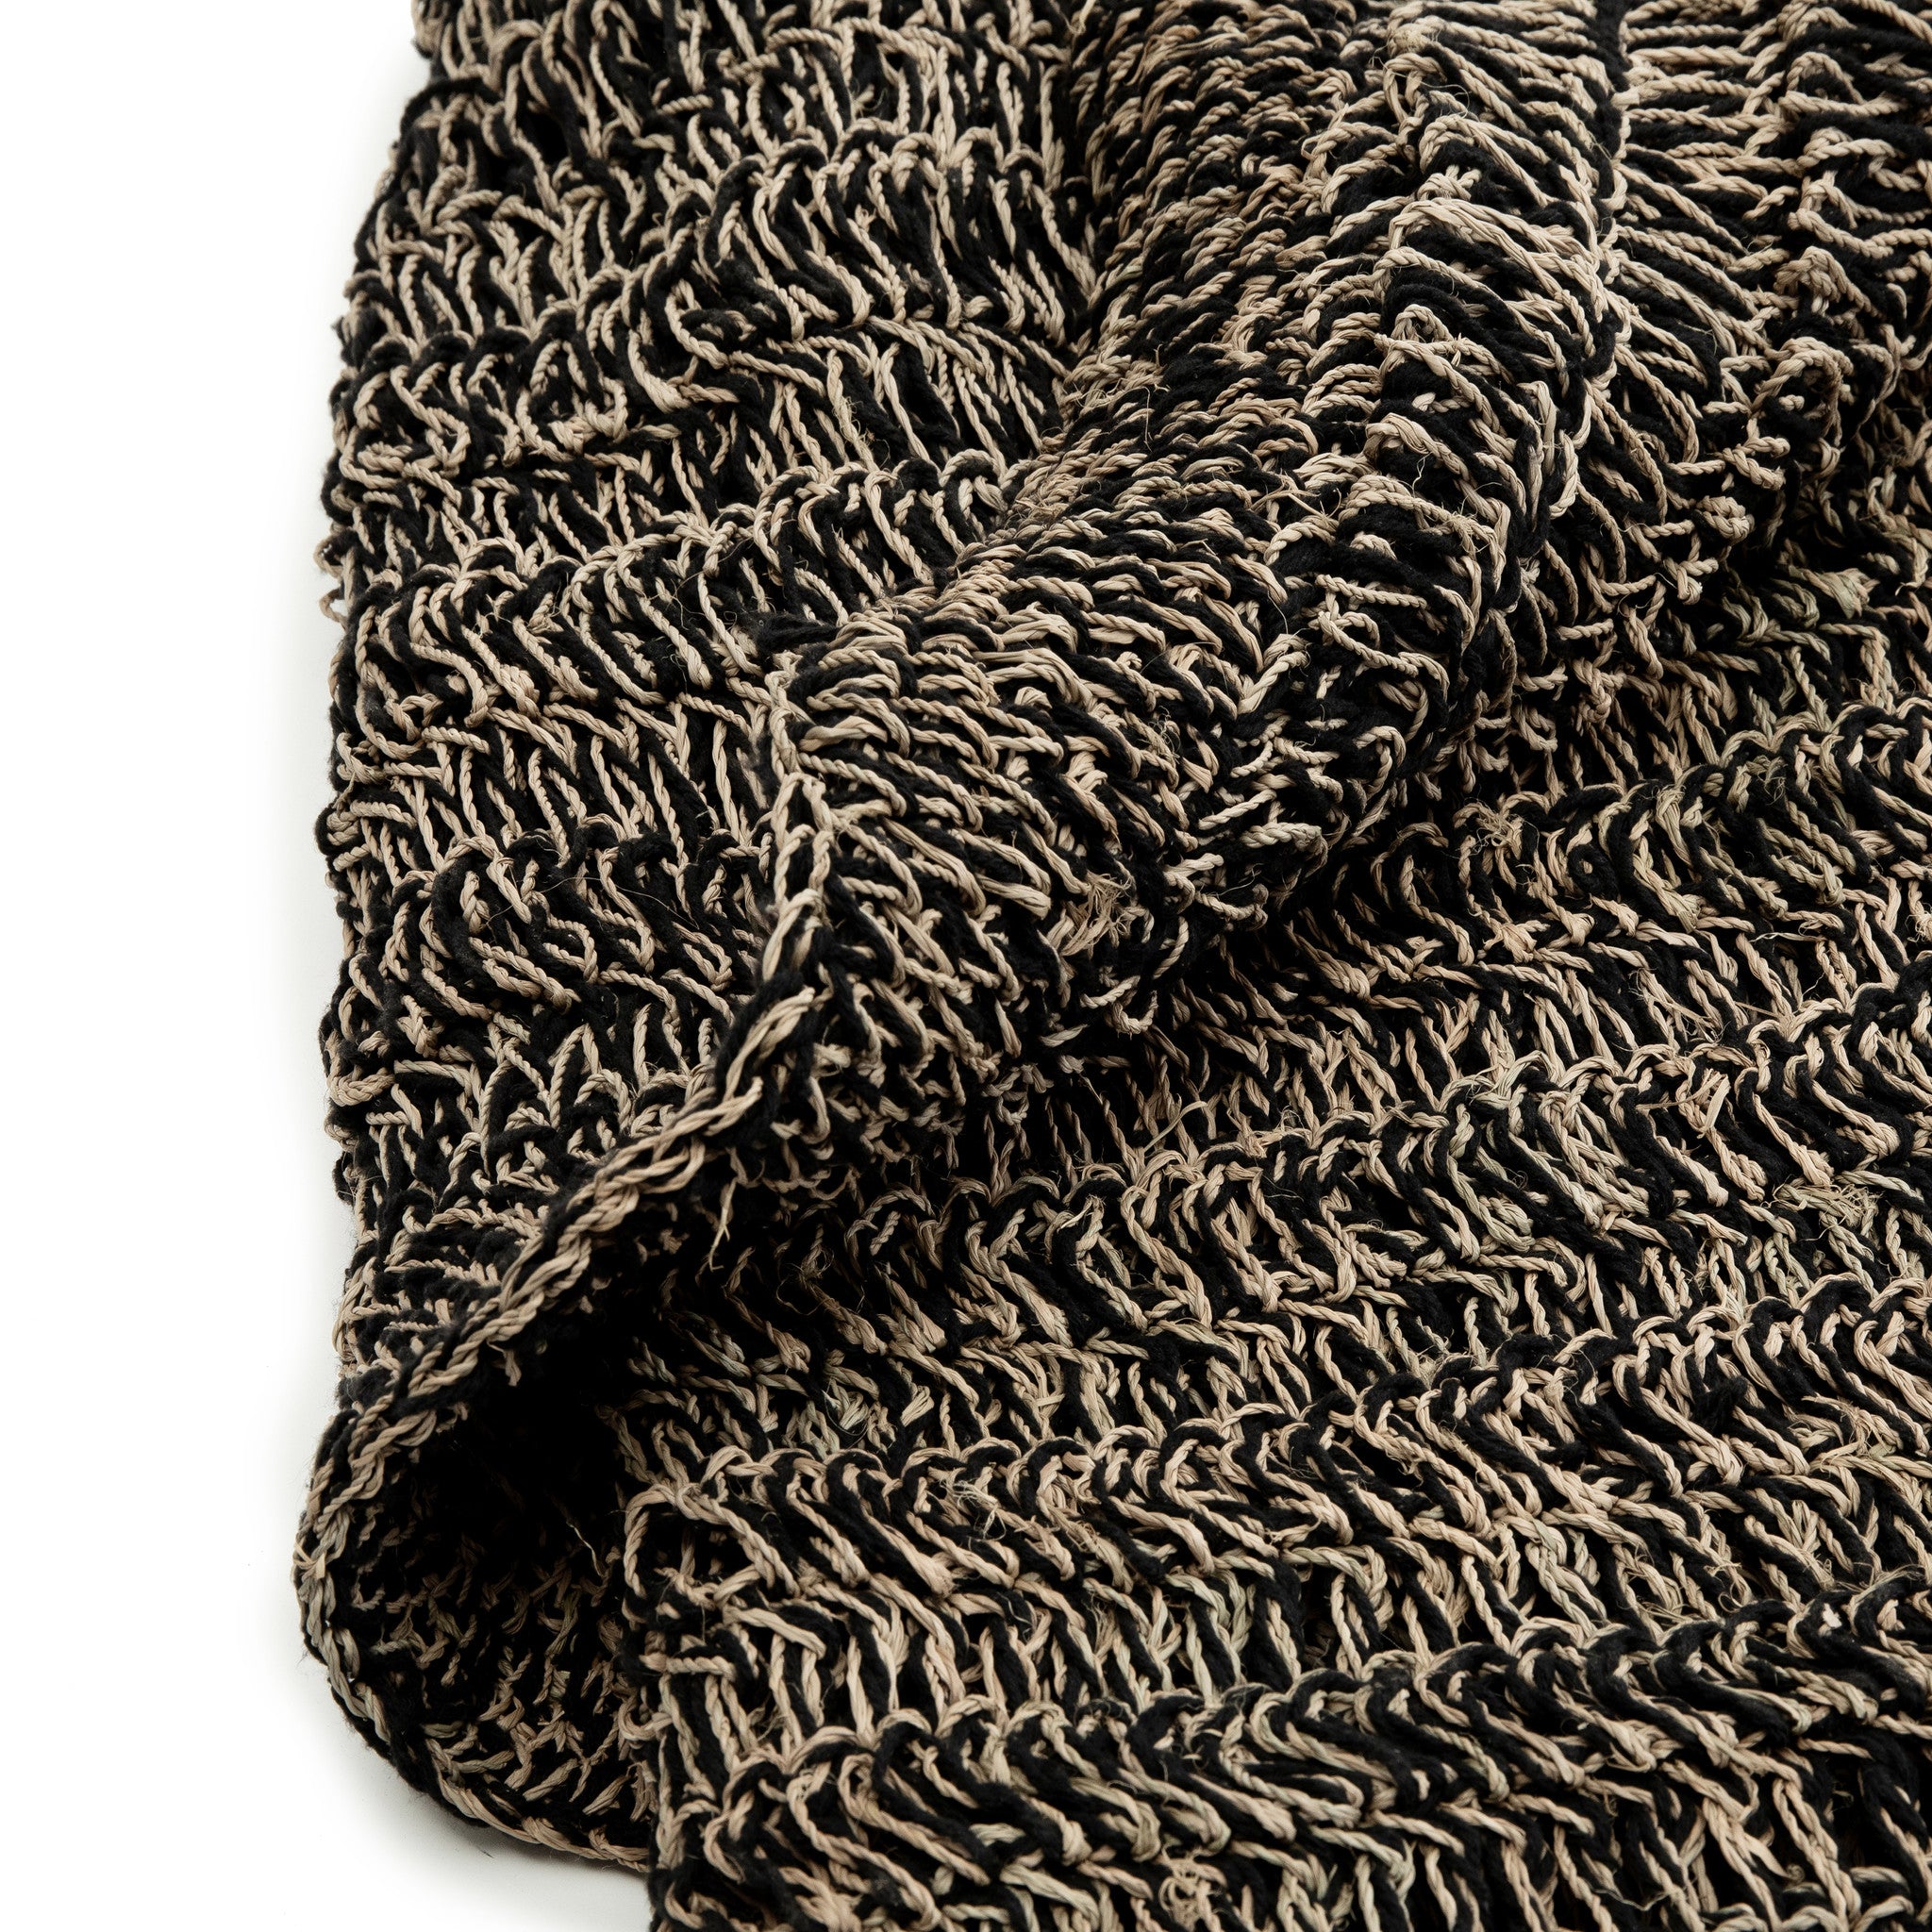 THE SEAGRASS Carpet 100 Natural-Black macro view